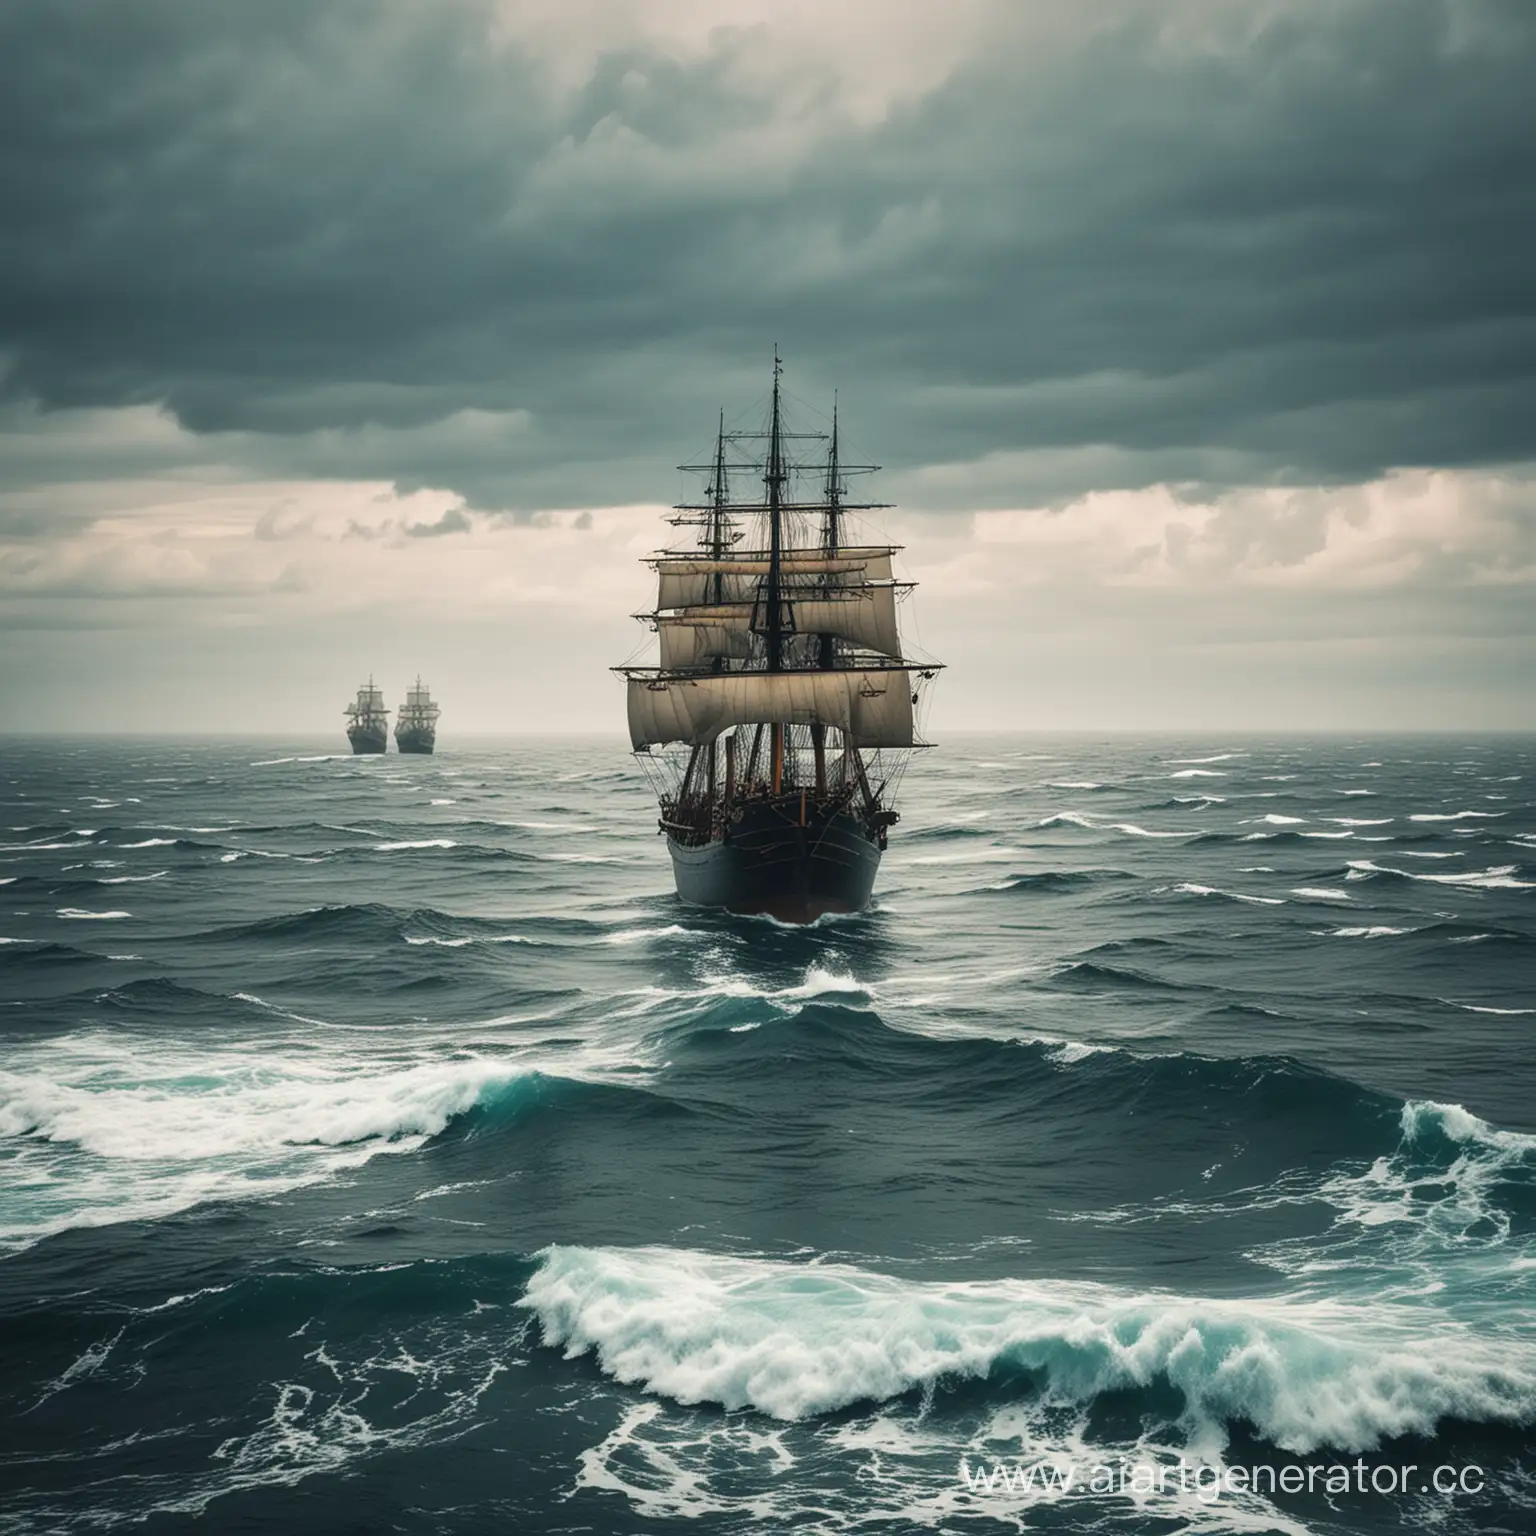 Inspiring-Sea-Journey-Sailboats-Exploring-Vast-Ocean-Horizons